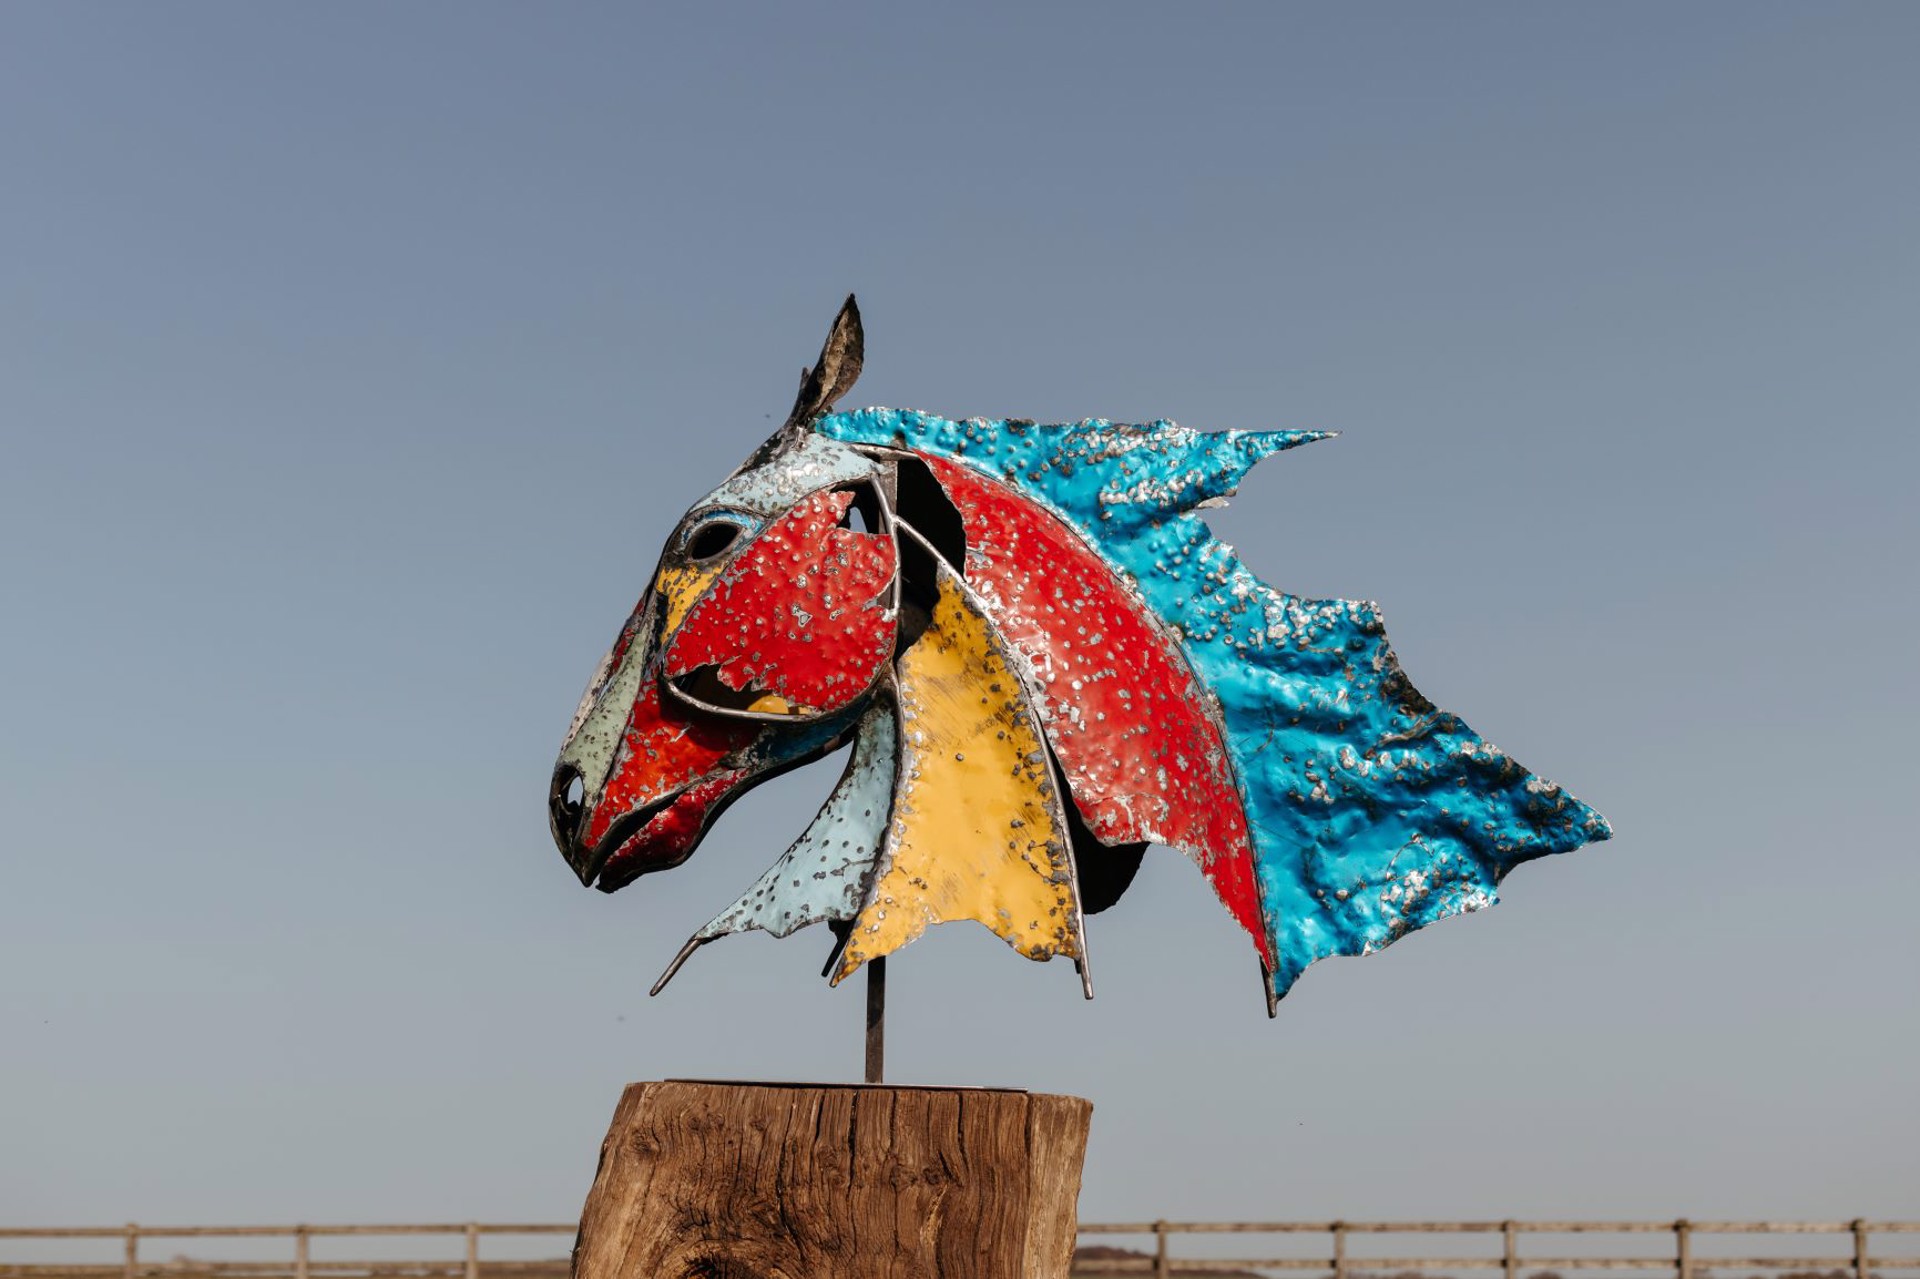 Carse Horse by Ollie Holman